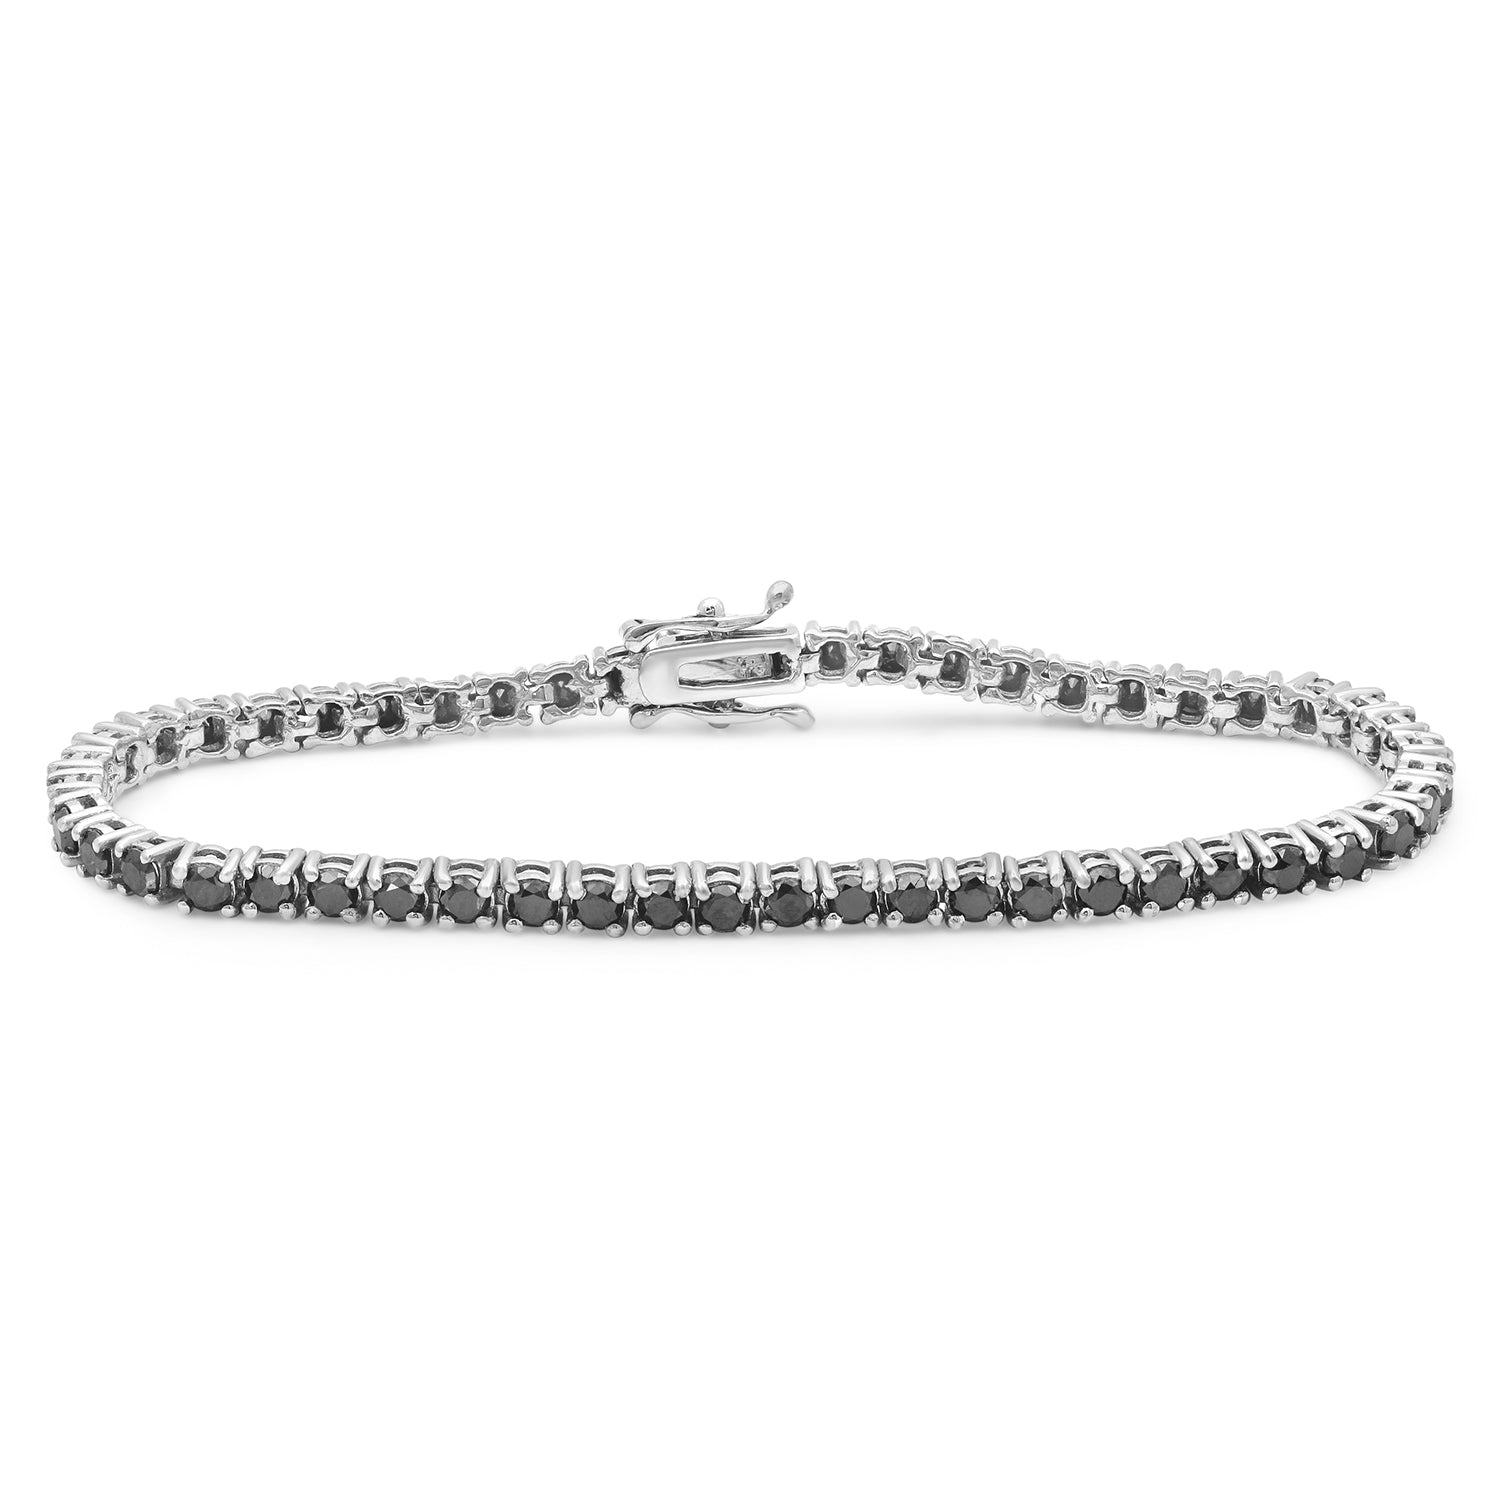 4.20Ctw Round cut natural diamond tennis bracelet for Women at Rs 307439 |  हीरे के कंगन in Surat | ID: 26102833933